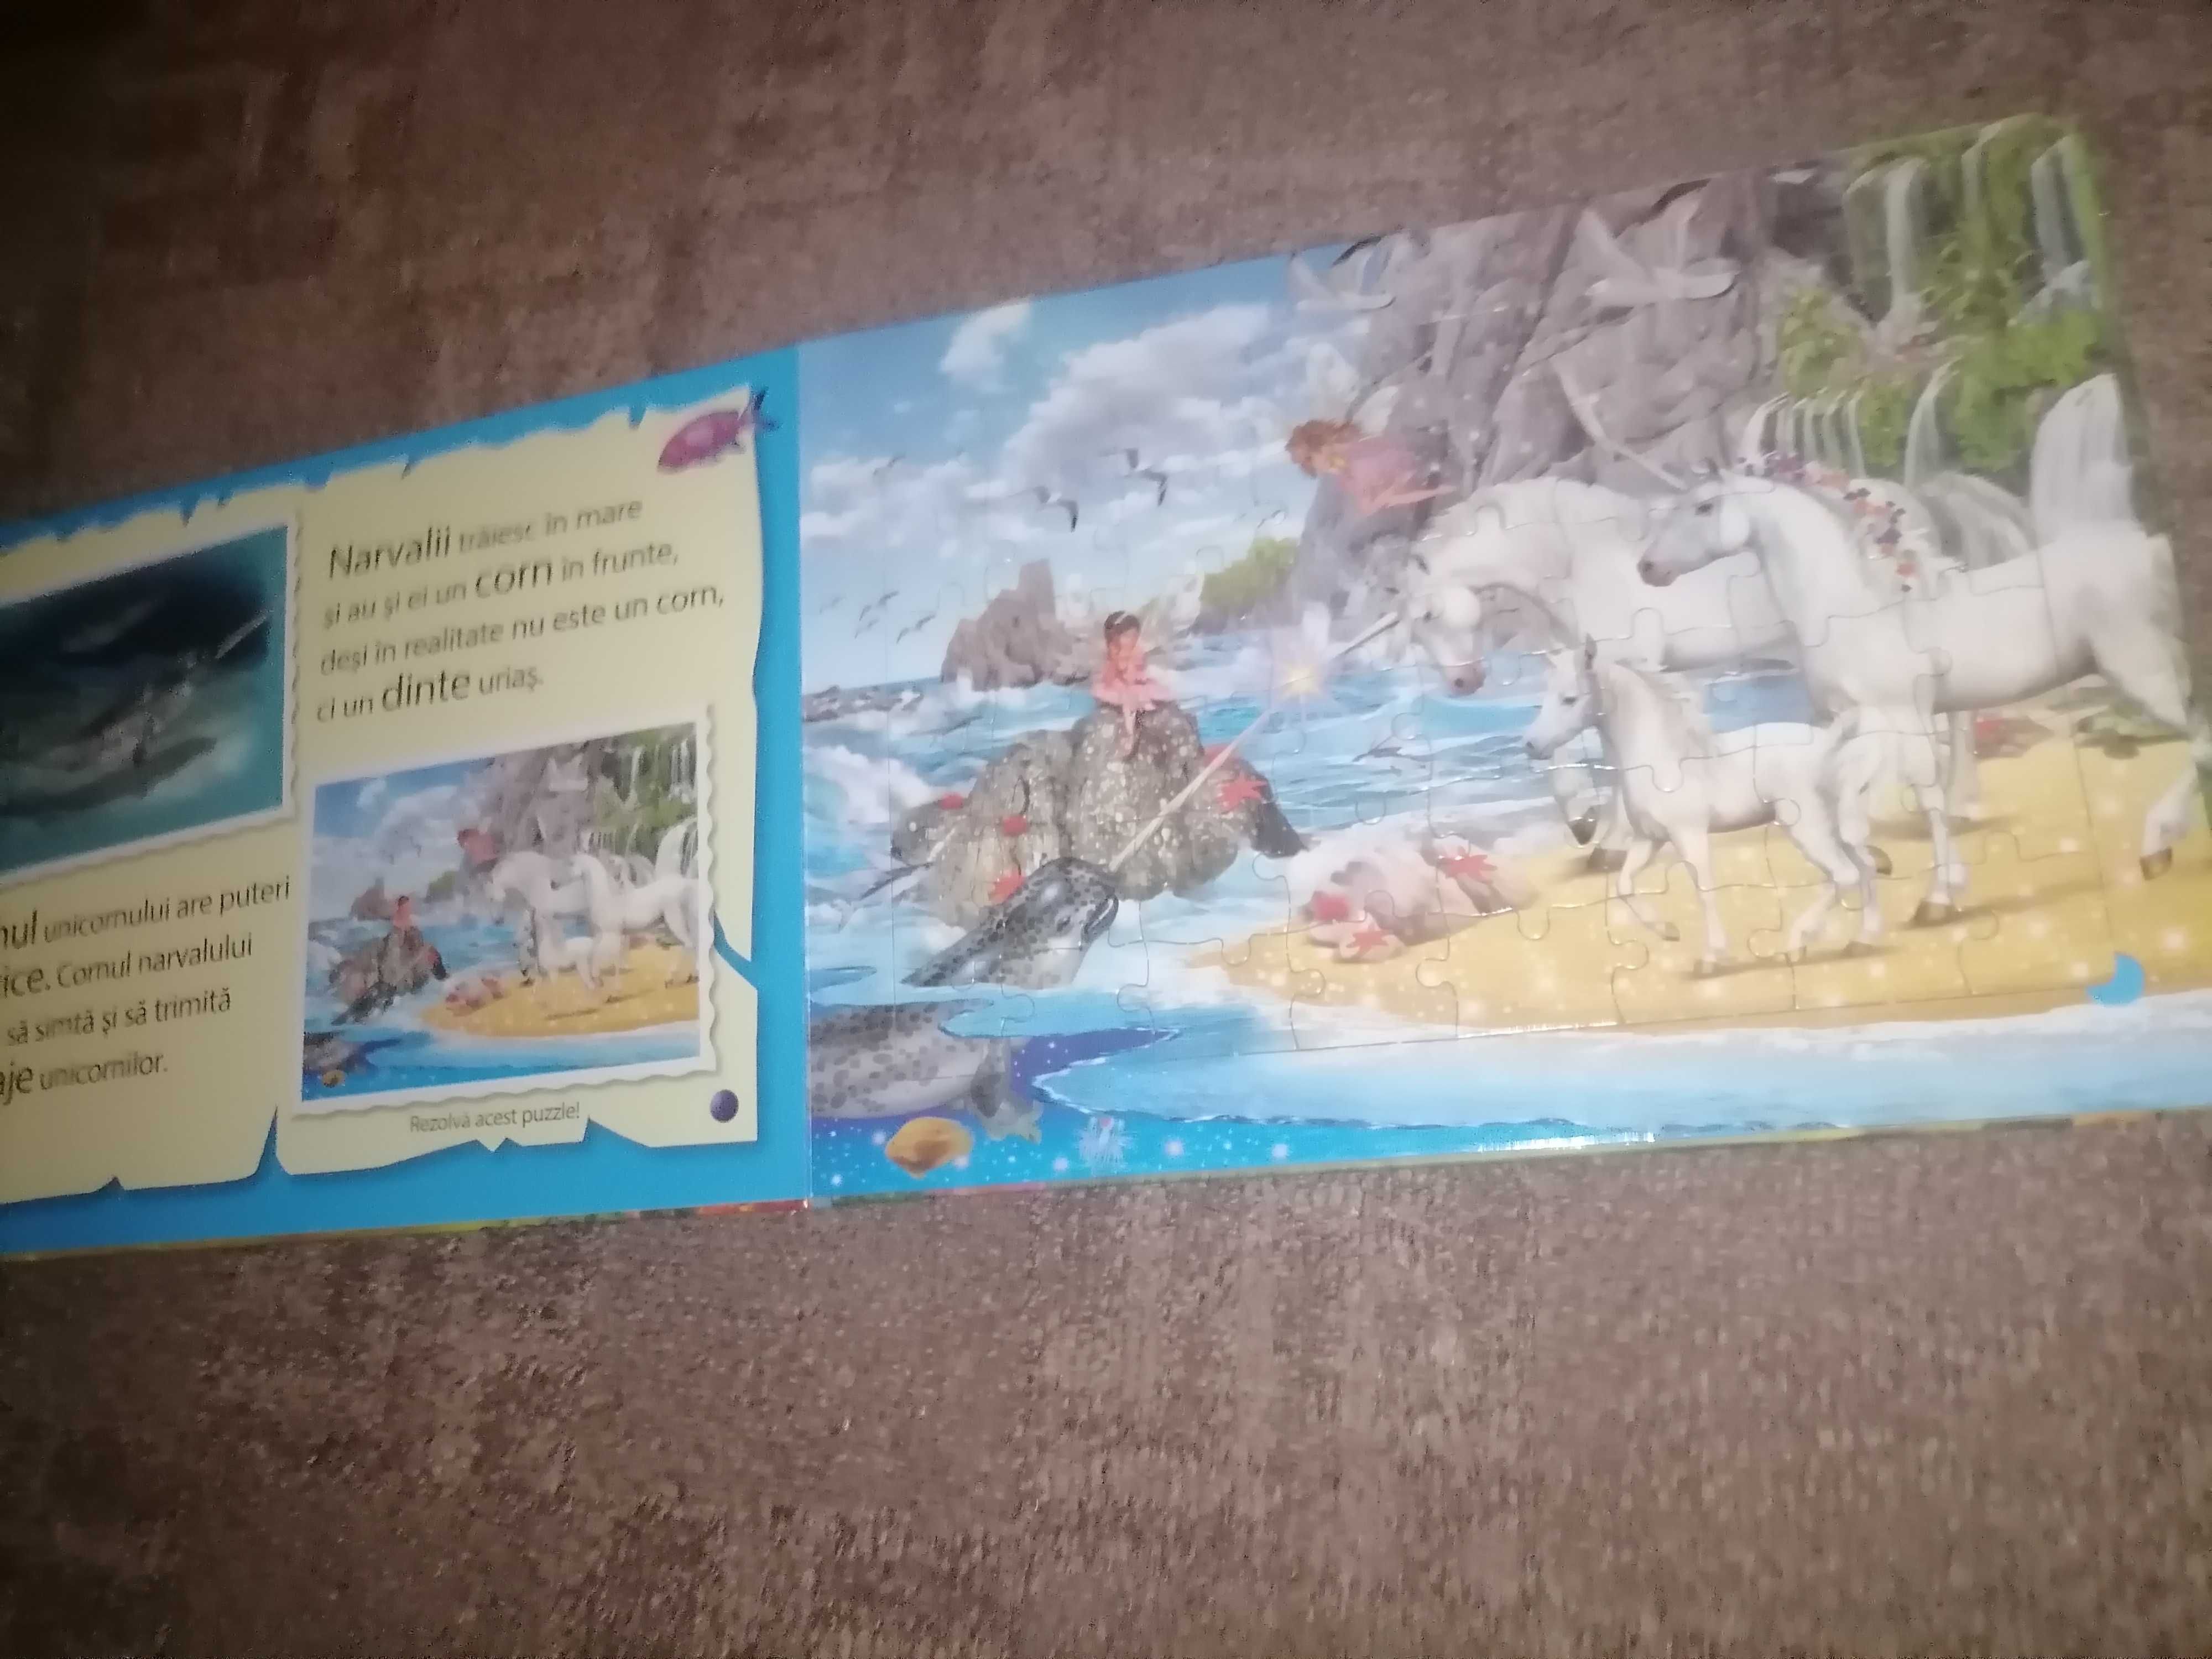 Carte puzzle unicorni